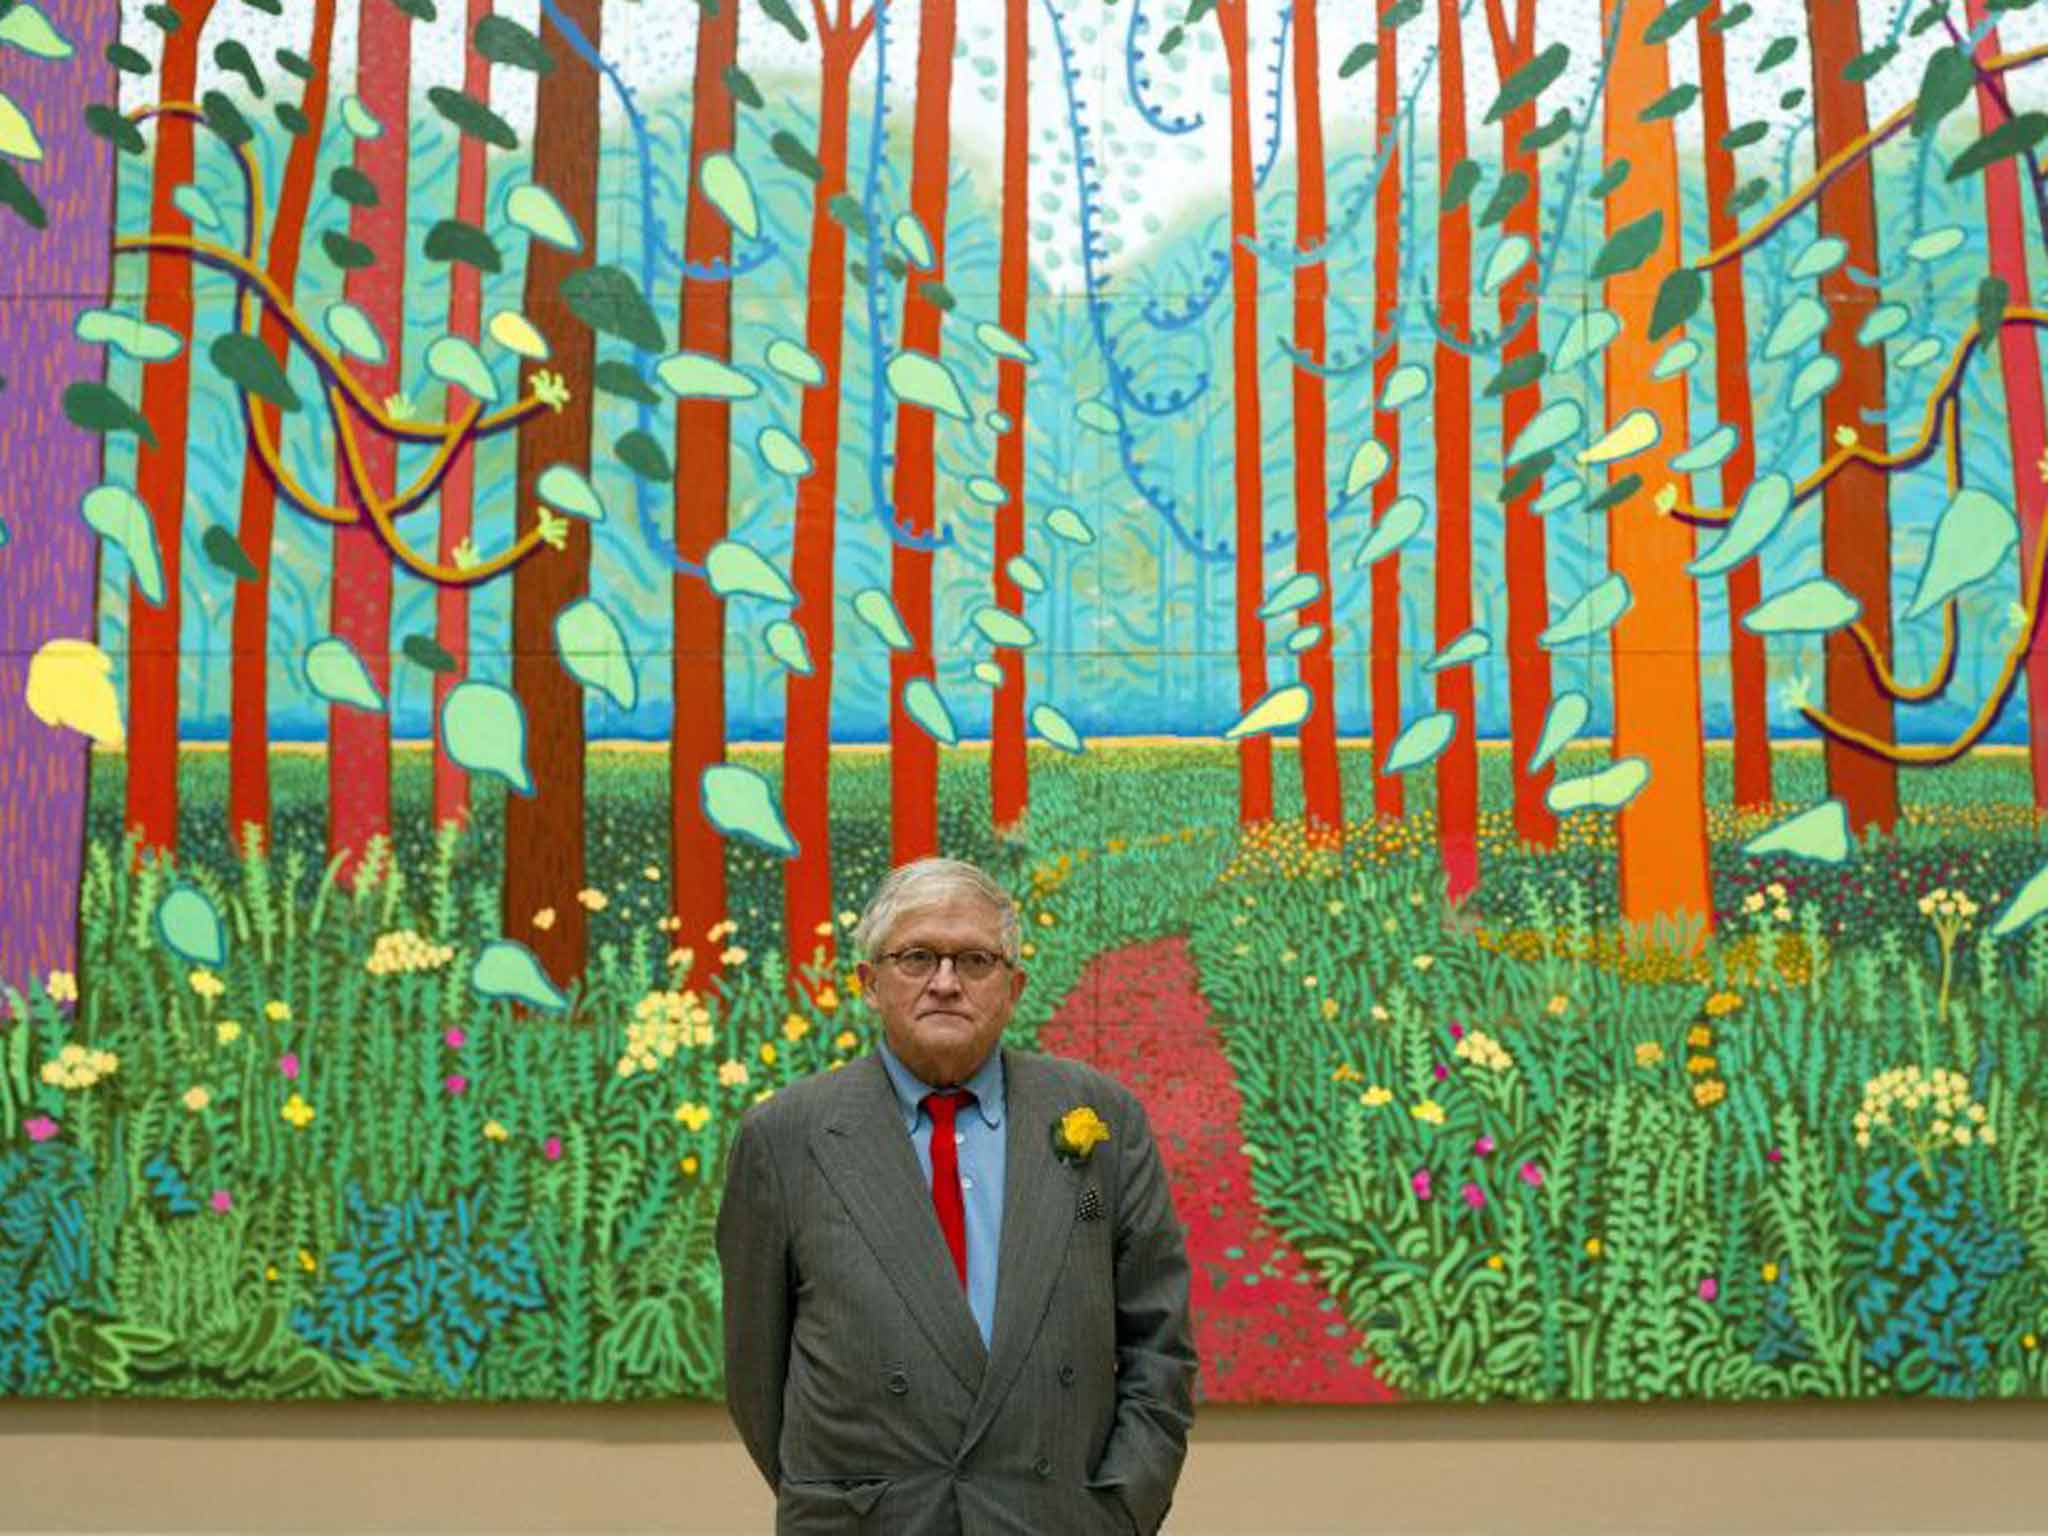 David Hockney had 600,000 visitors flock to his 2012 Royal Academy Show (EPA)